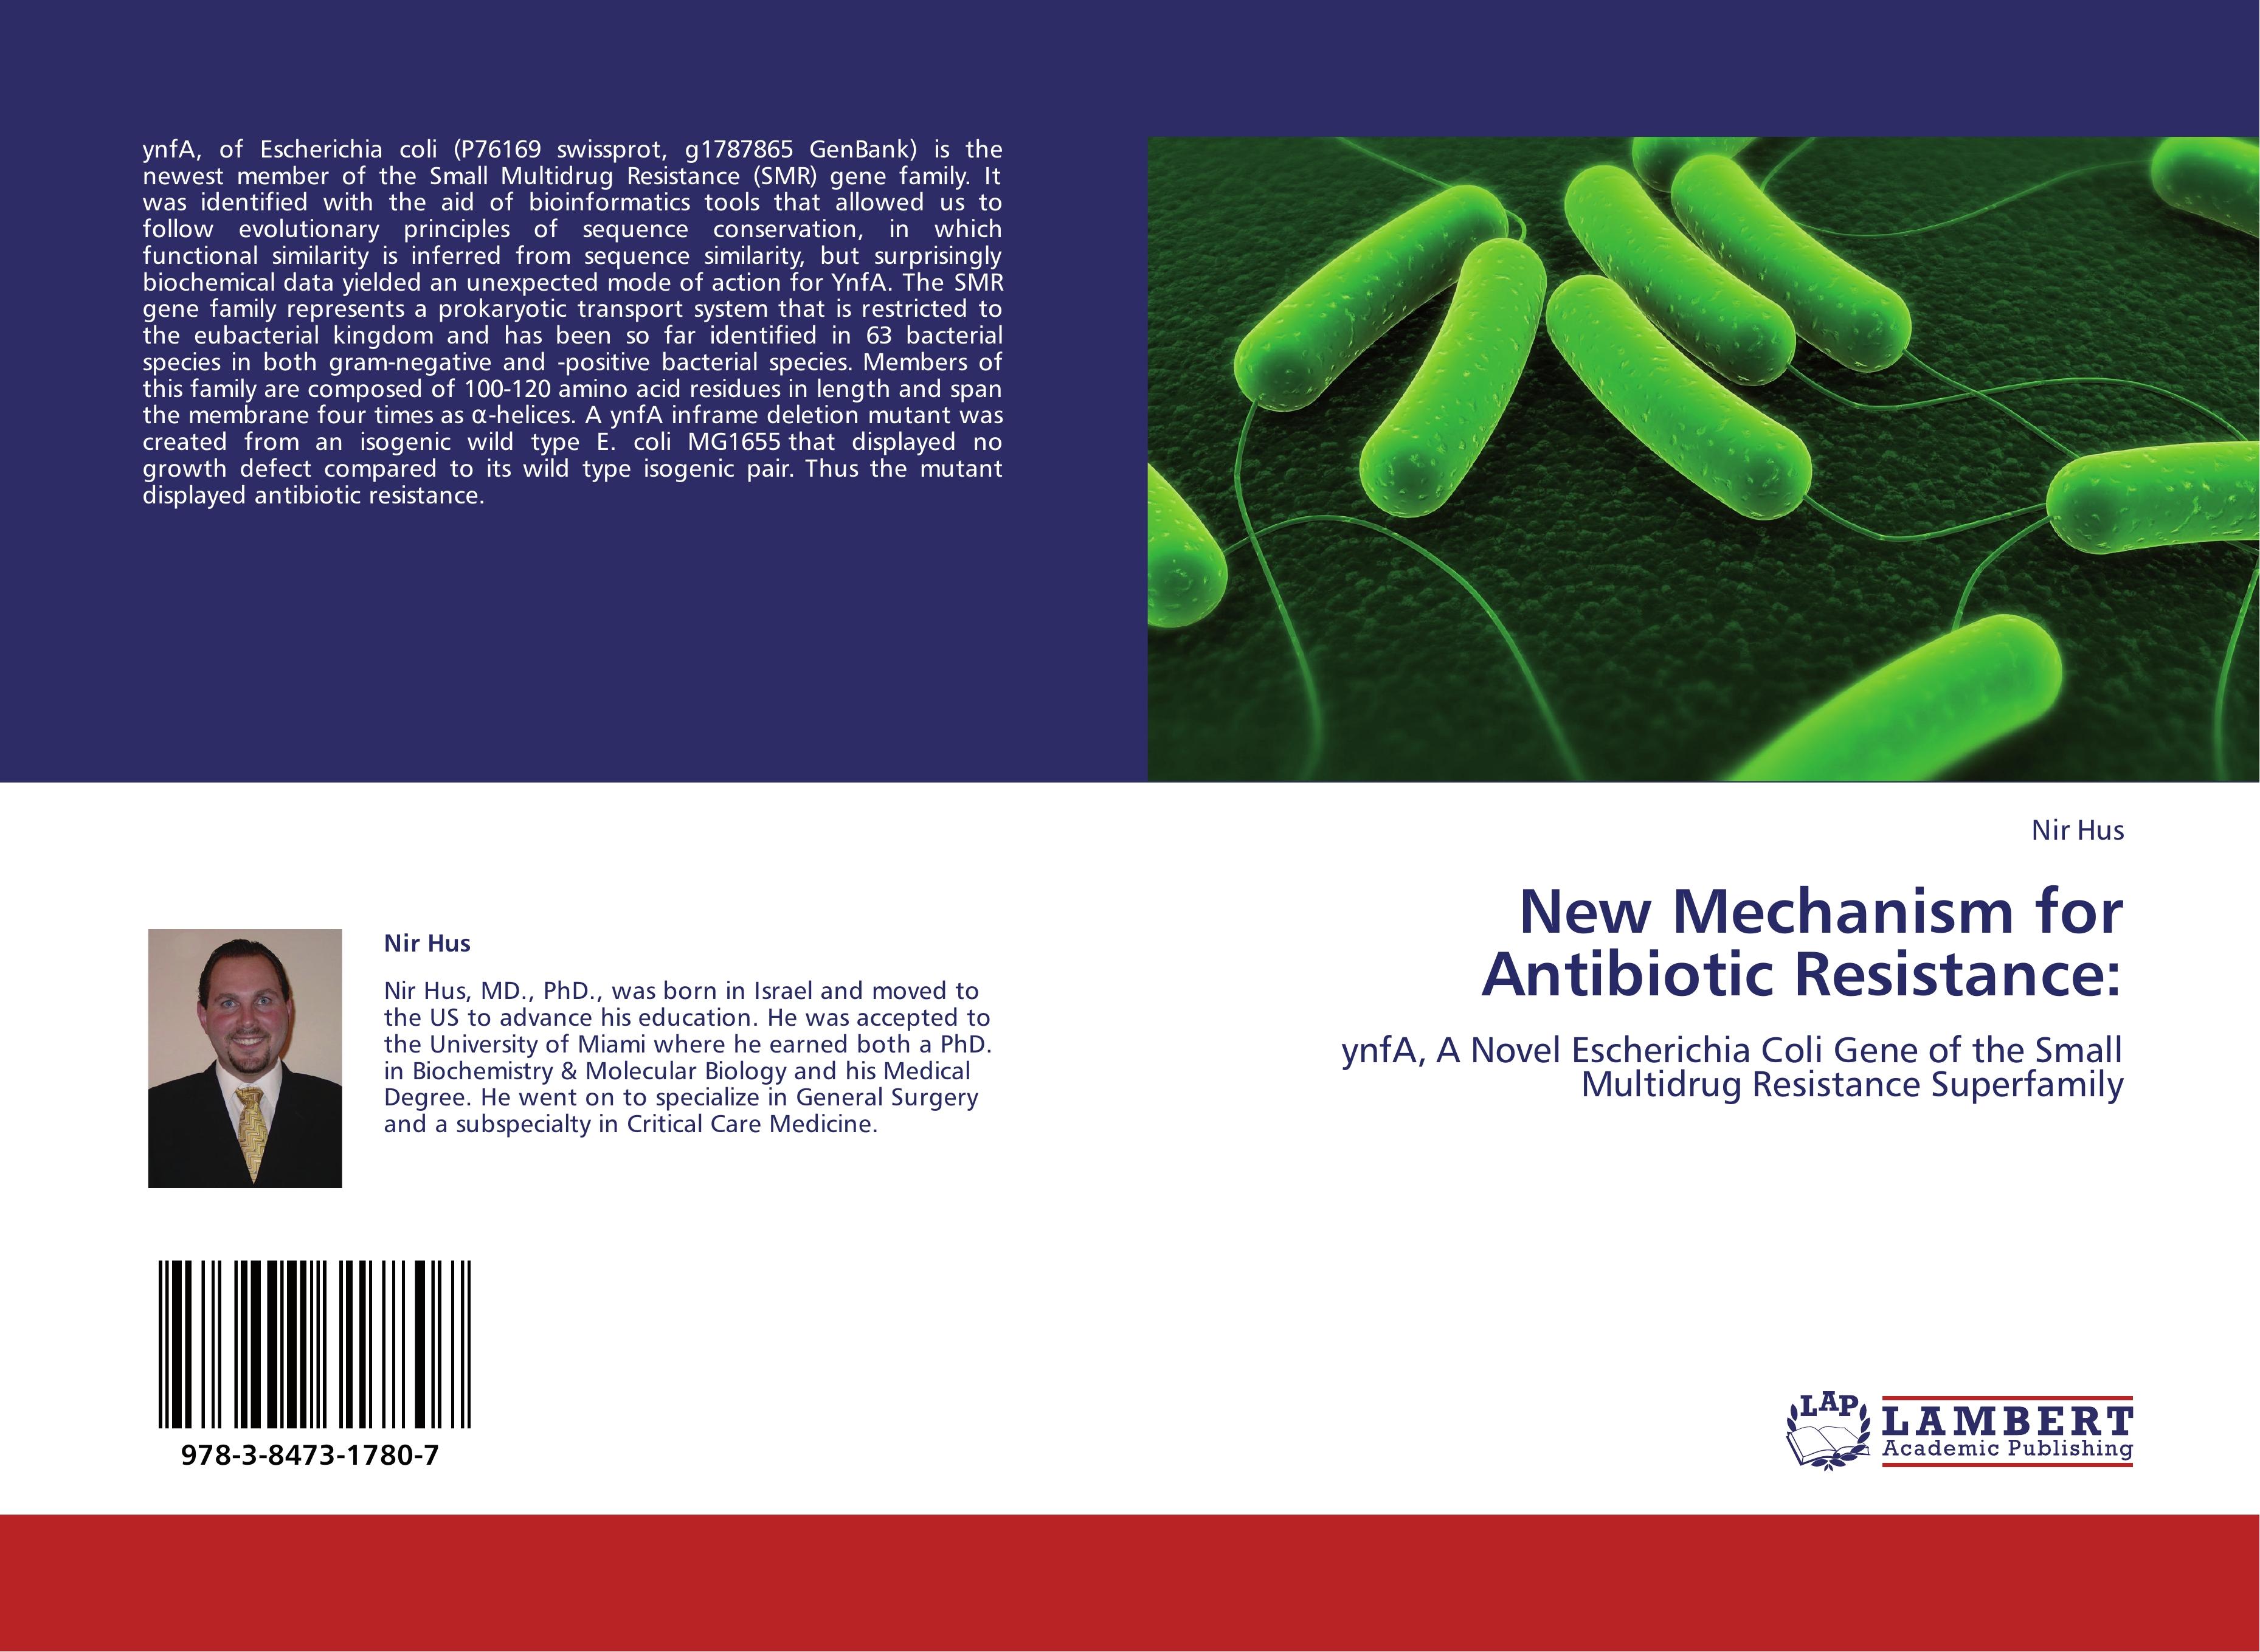 New Mechanism for Antibiotic Resistance - Nir Hus